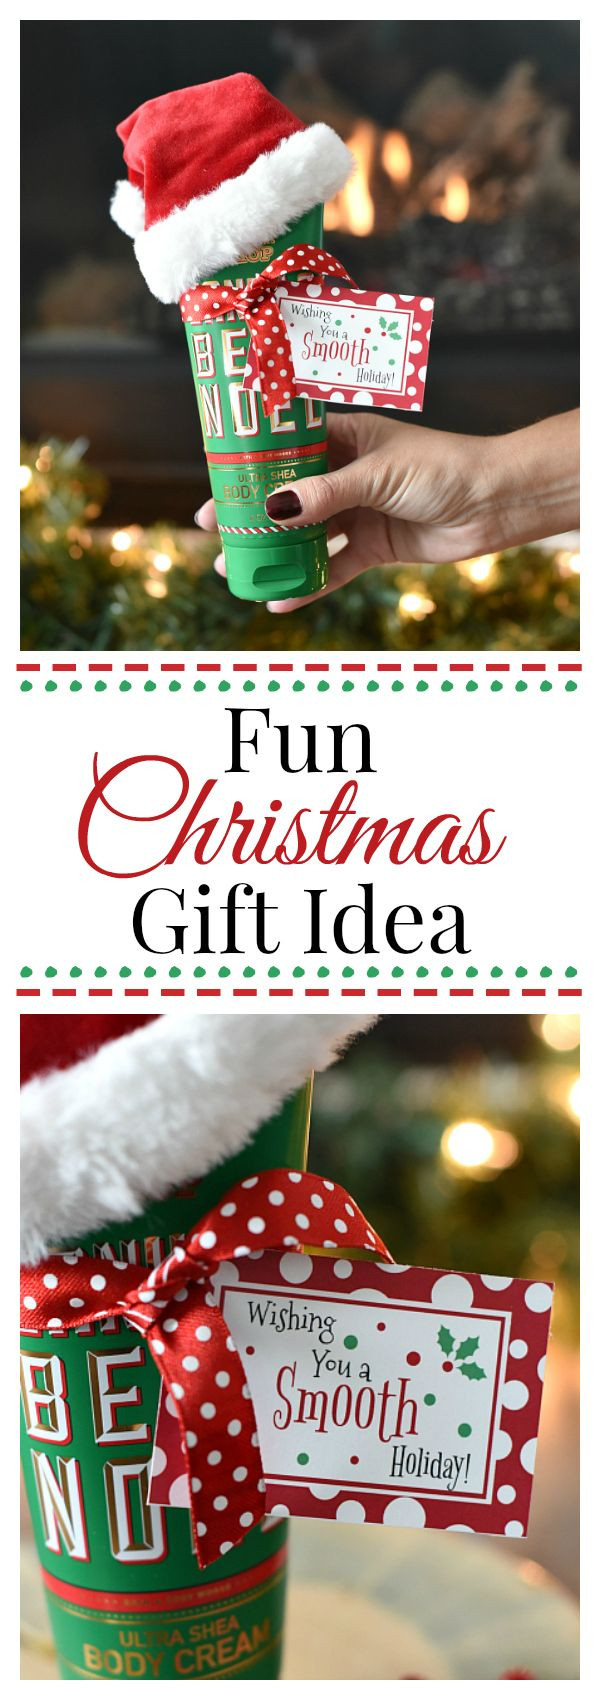 Office Christmas Gift Ideas
 25 unique fice christmas ts ideas on Pinterest